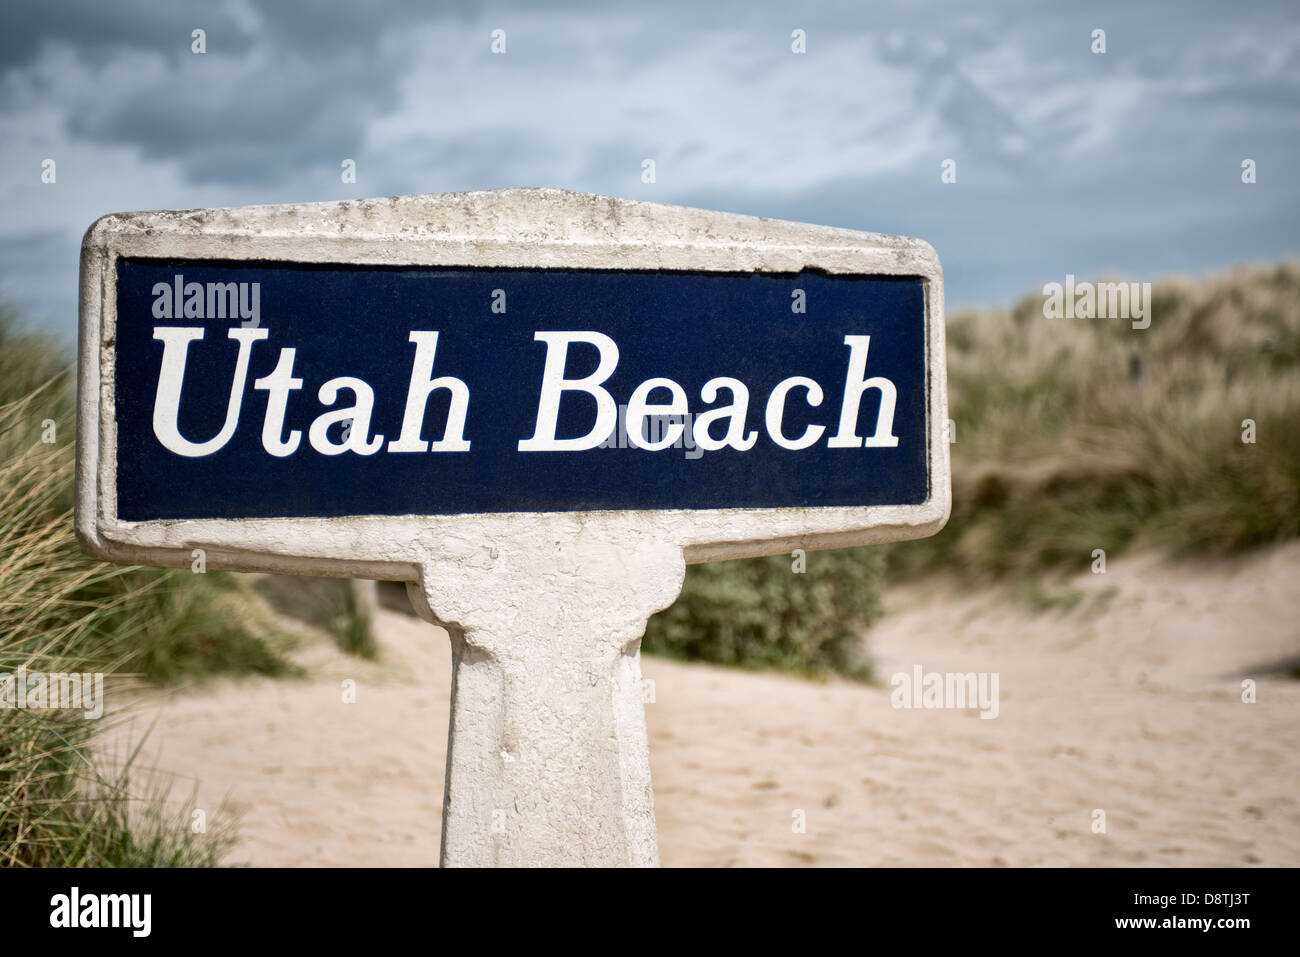 File:Sulky-Utah-Beach-50.jpg - Wikimedia Commons